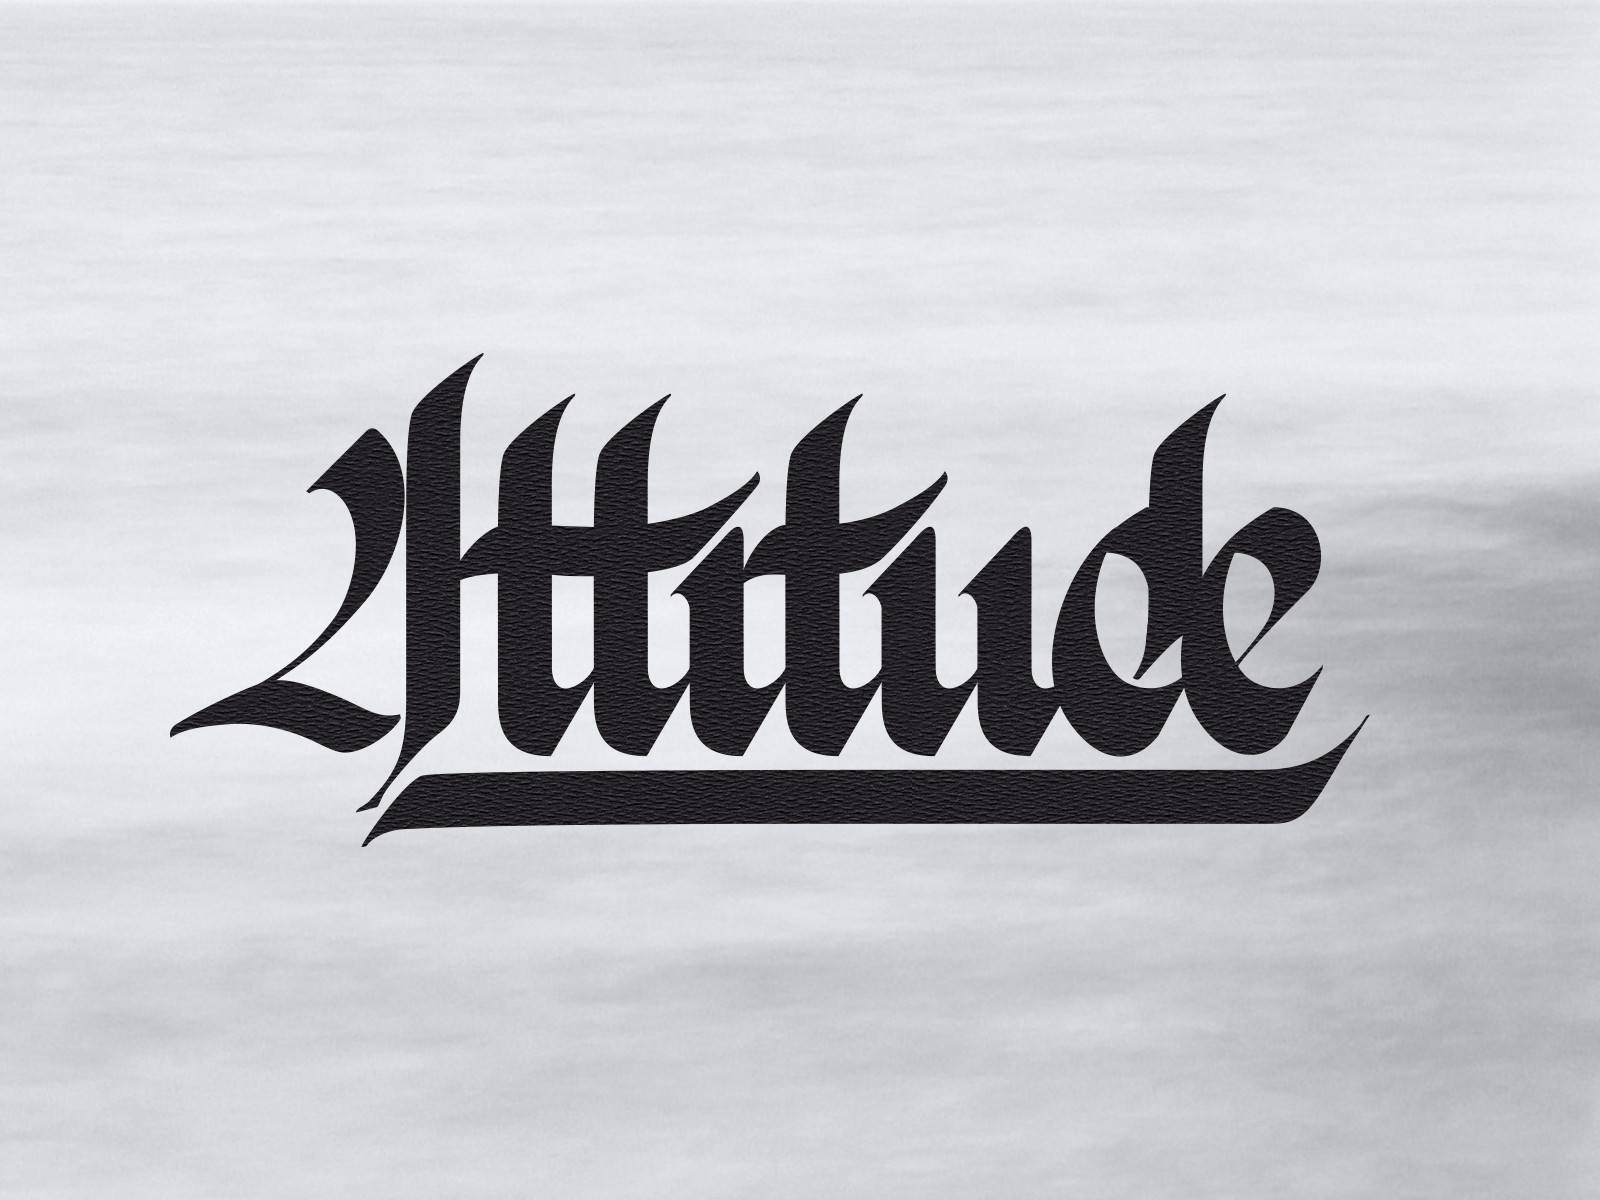 Attitude - Free people icons